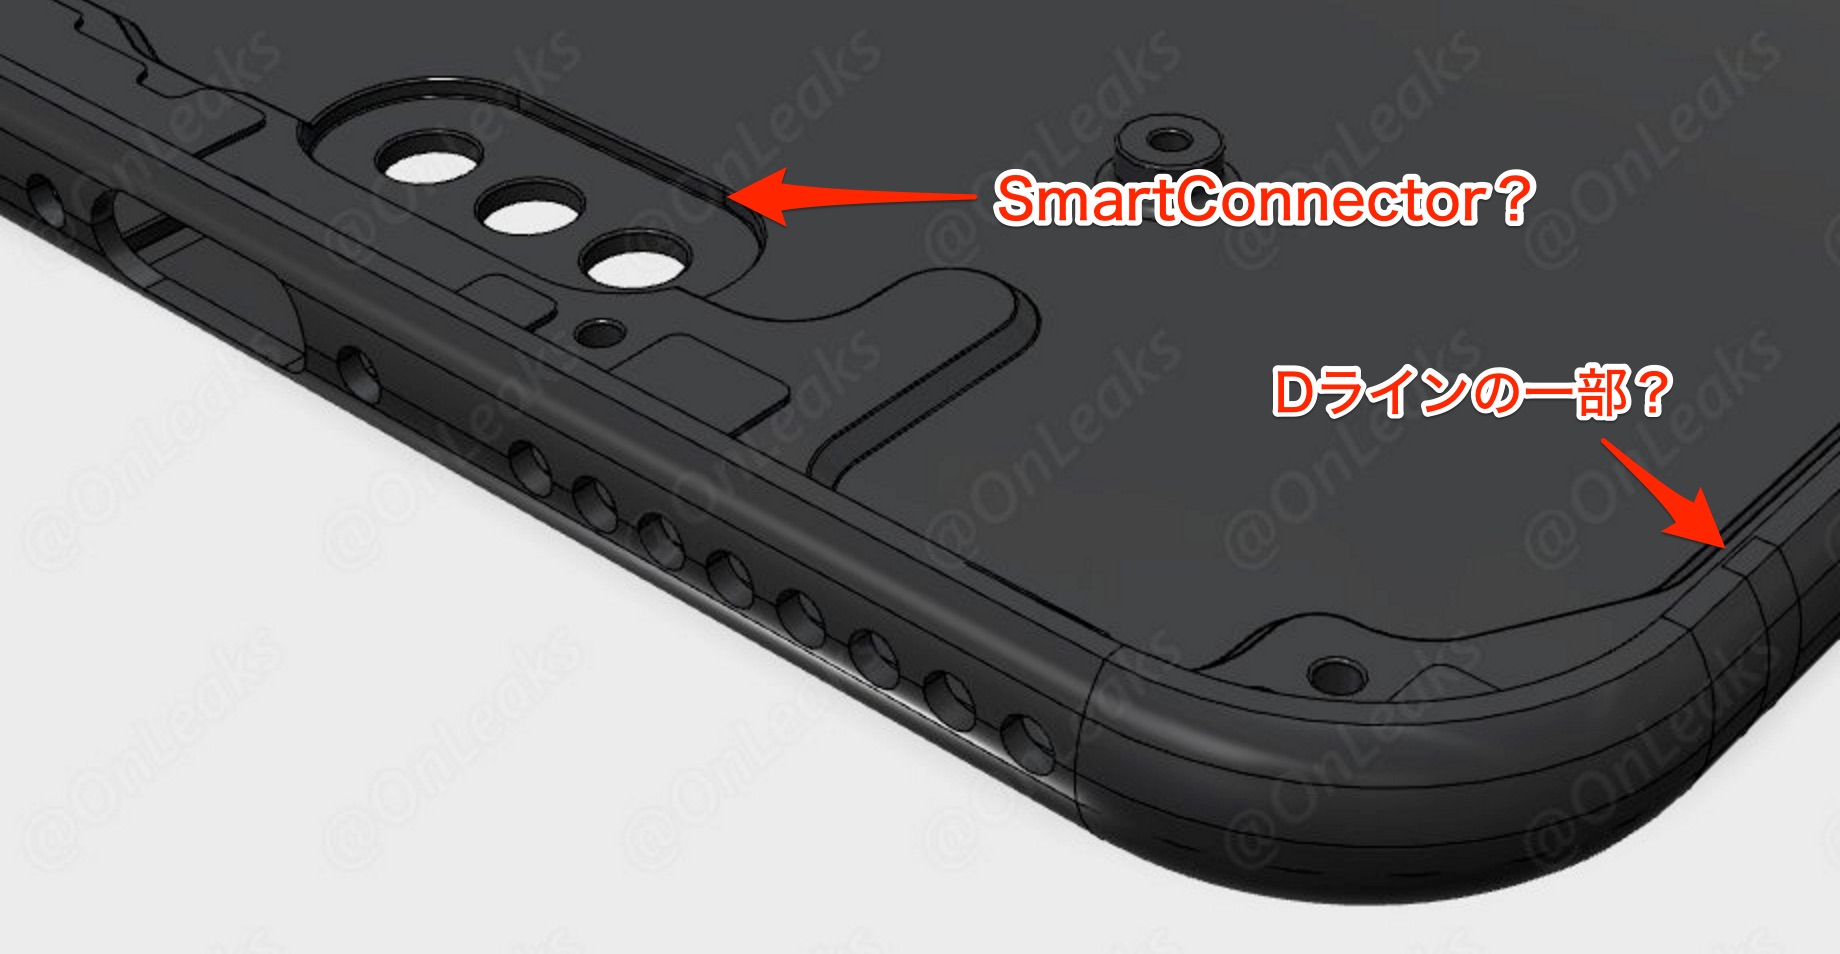 iPhone 7 Plusの新画像がリーク、Smart Connector搭載など